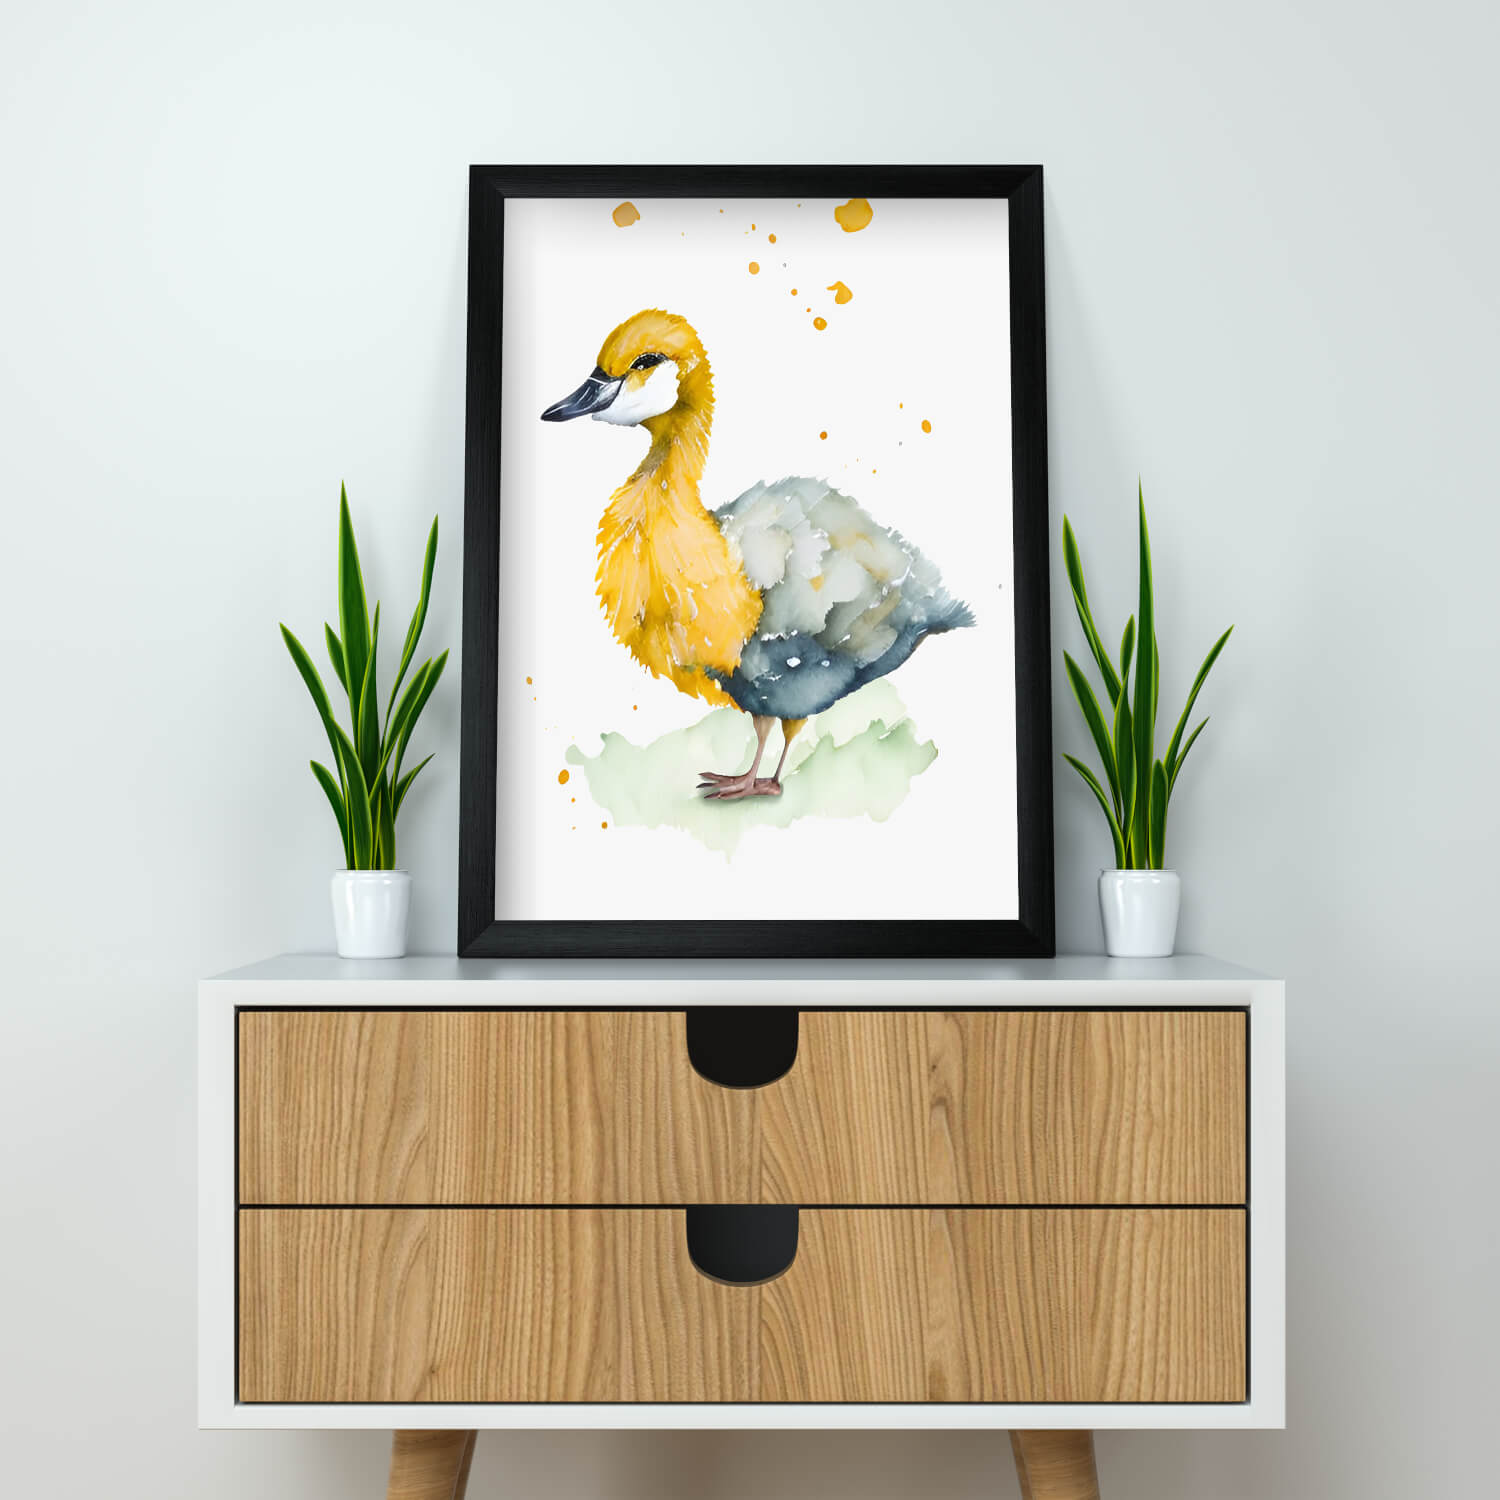 Duck Duo Delight - Digital Wall Art Set Of 2